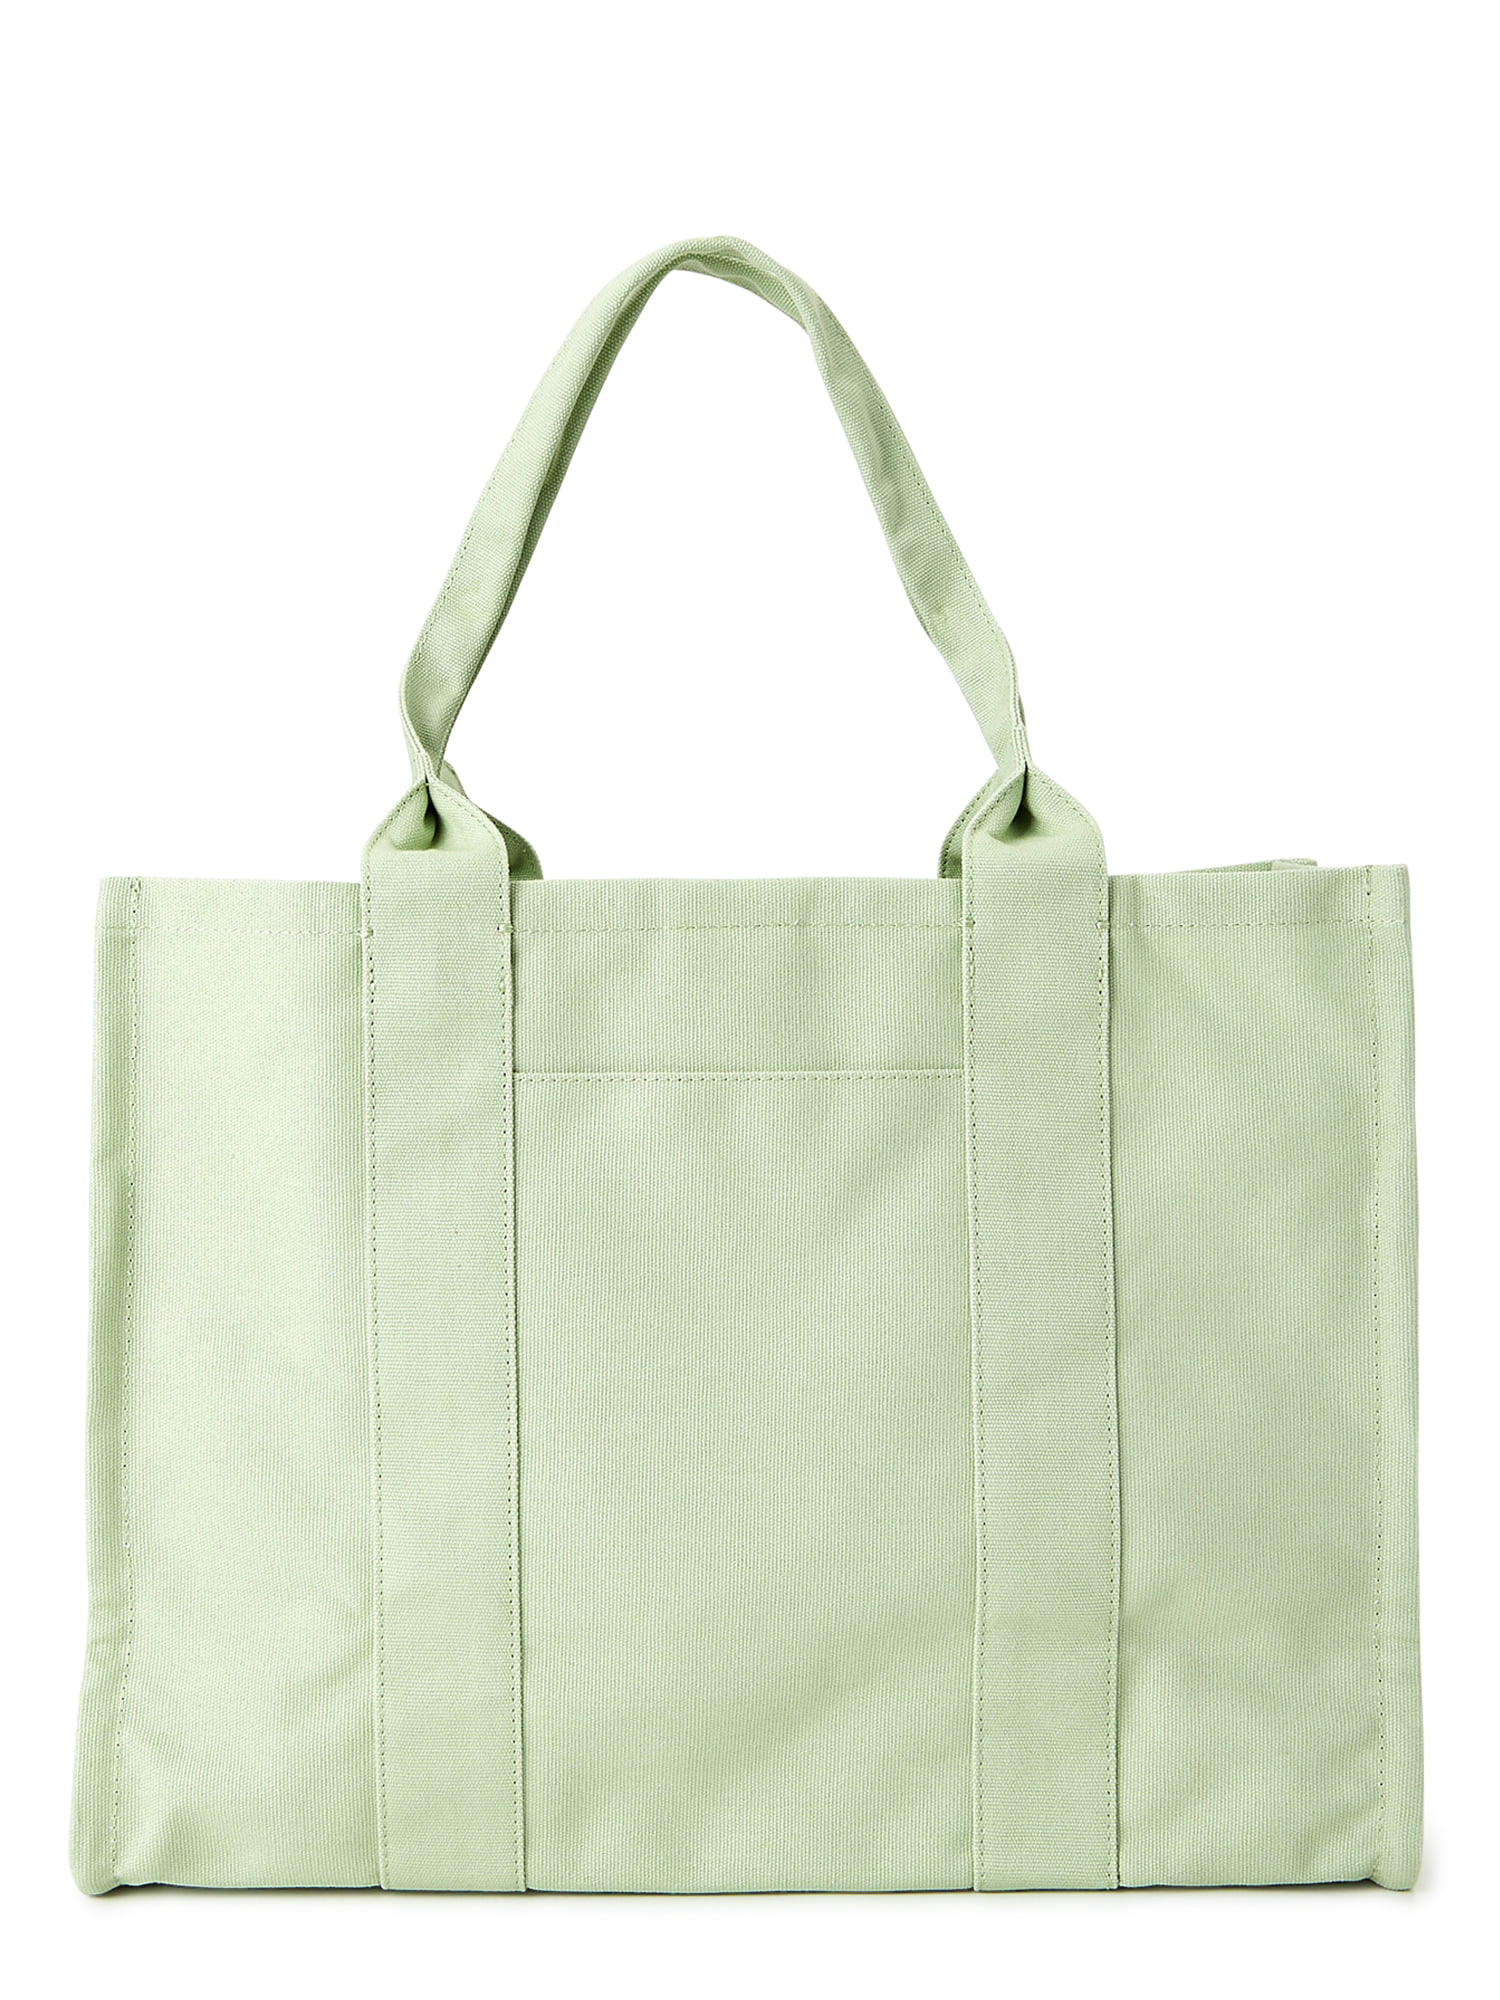 Yeti Tote Bag on Sale! YETI Crossroads Tote Bag Just $77.99 (Reg $180)!!